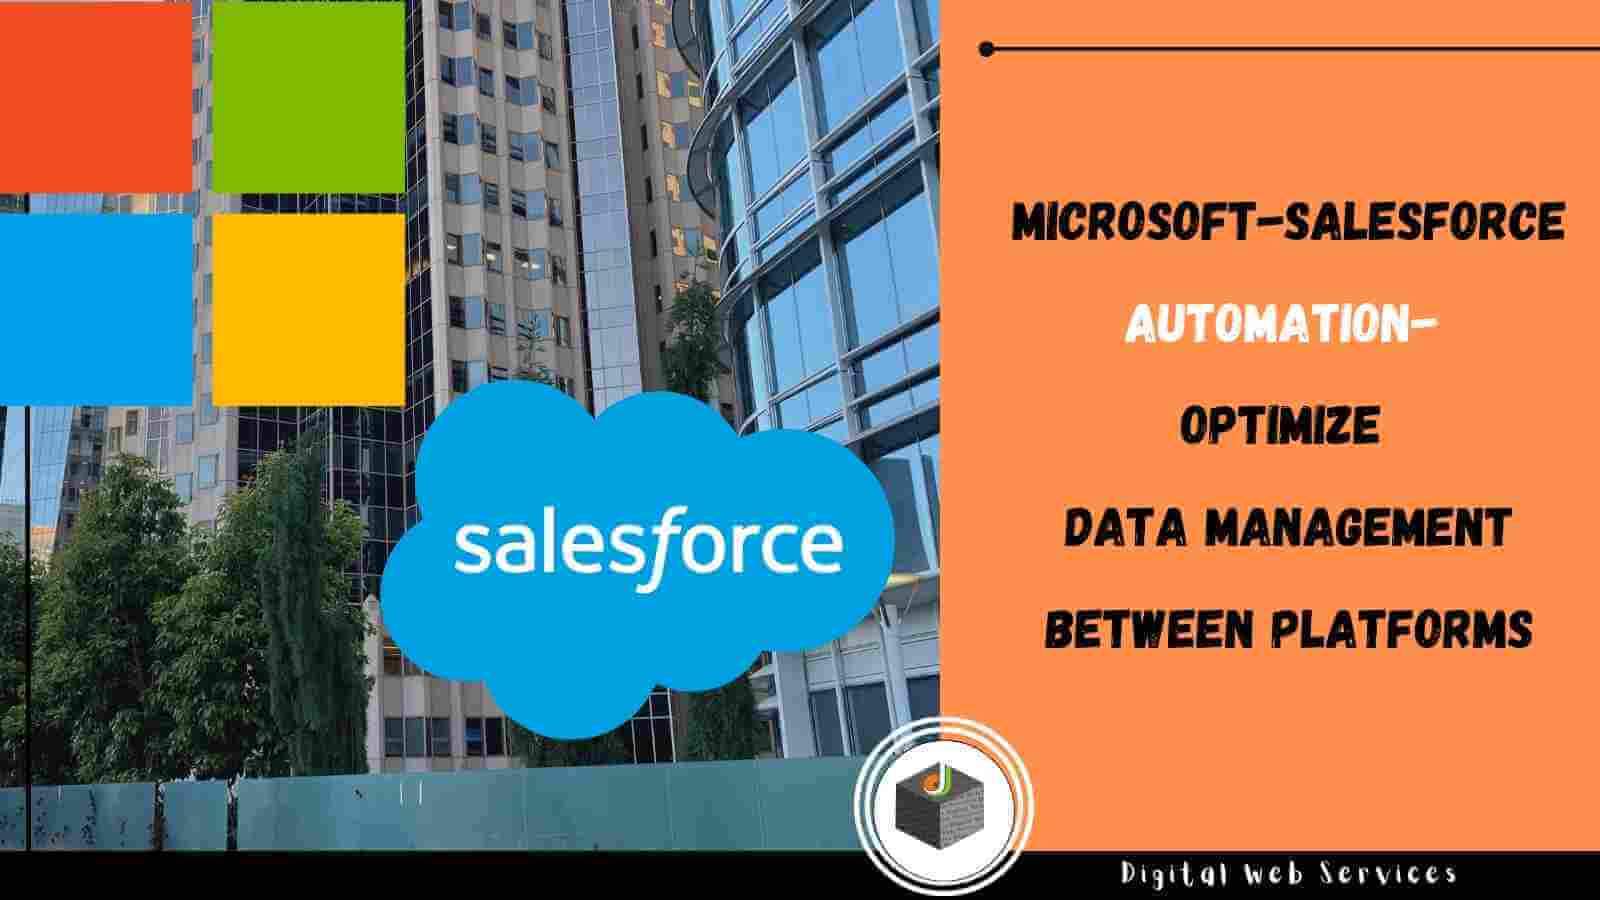 Microsoft-Salesforce Automation- Optimize Data Management Between Platforms